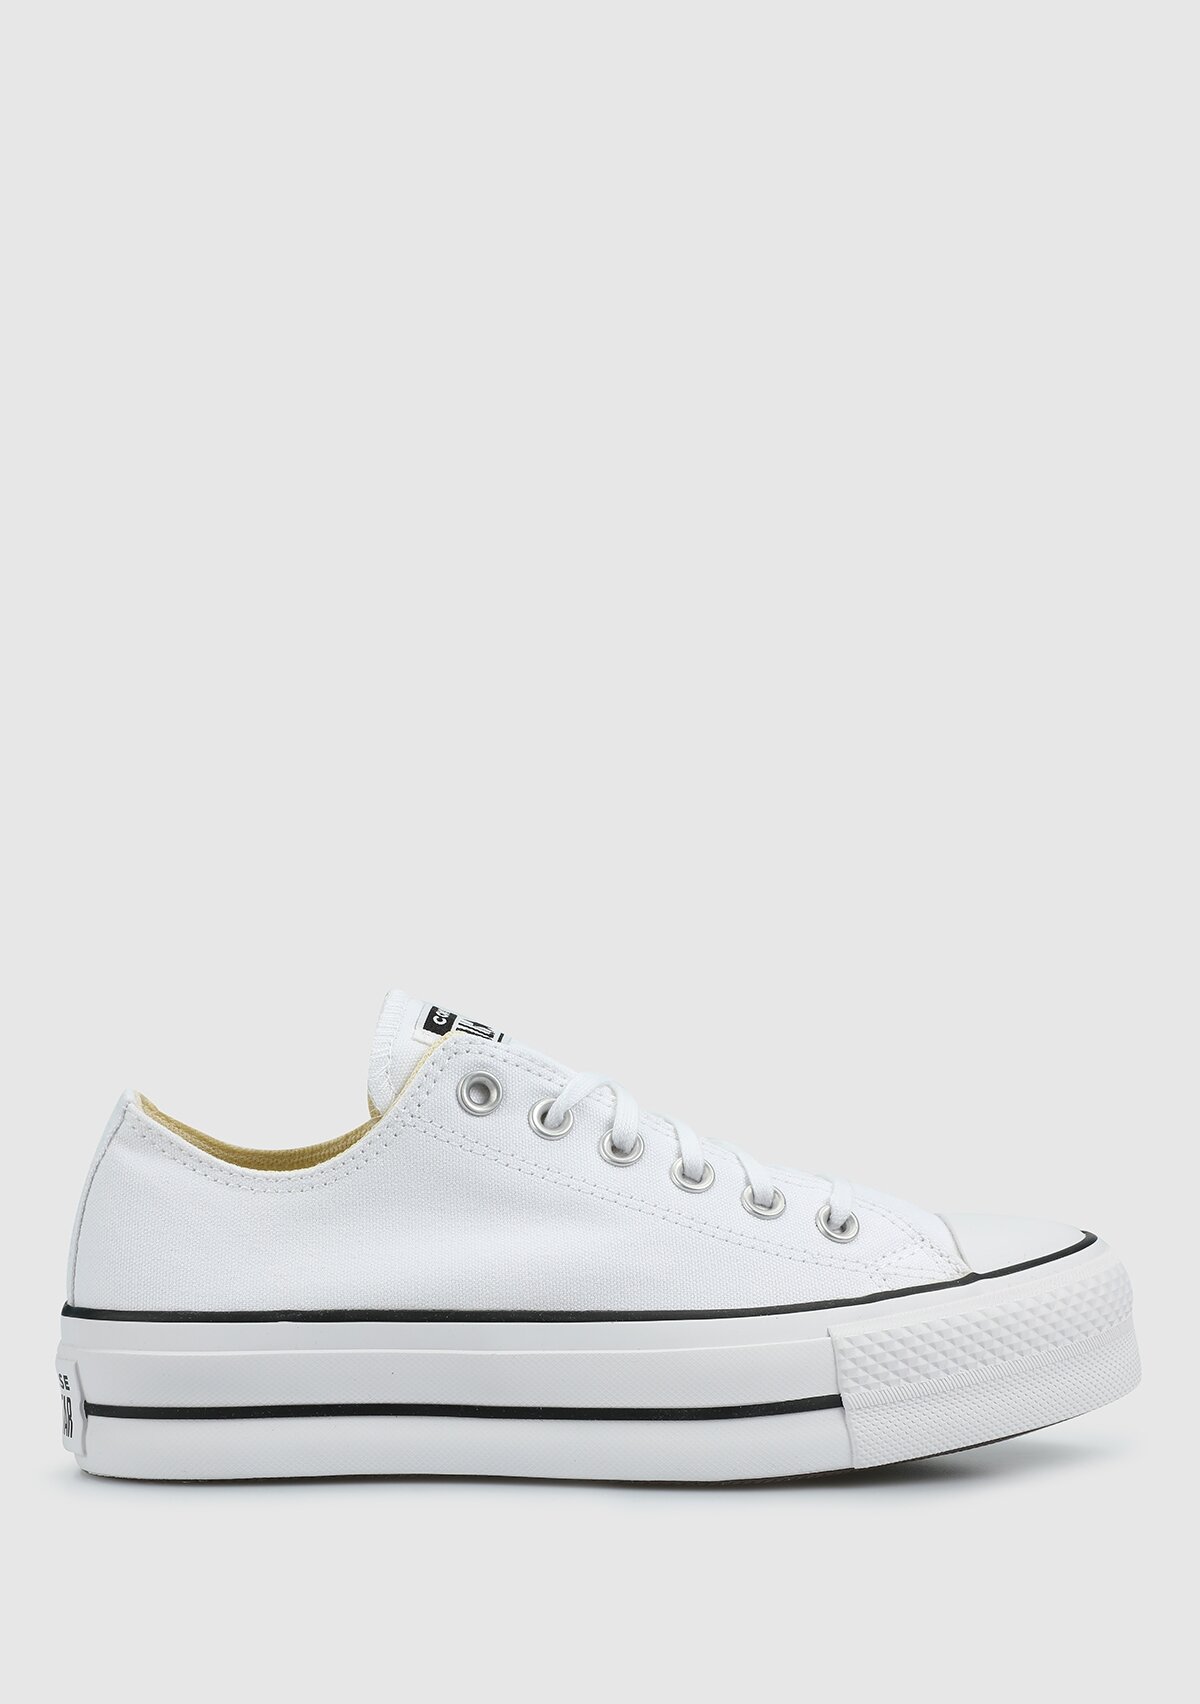 Converse Chuck Taylor All Star Canvas Platform Beyaz Kadın Sneaker 560251C 